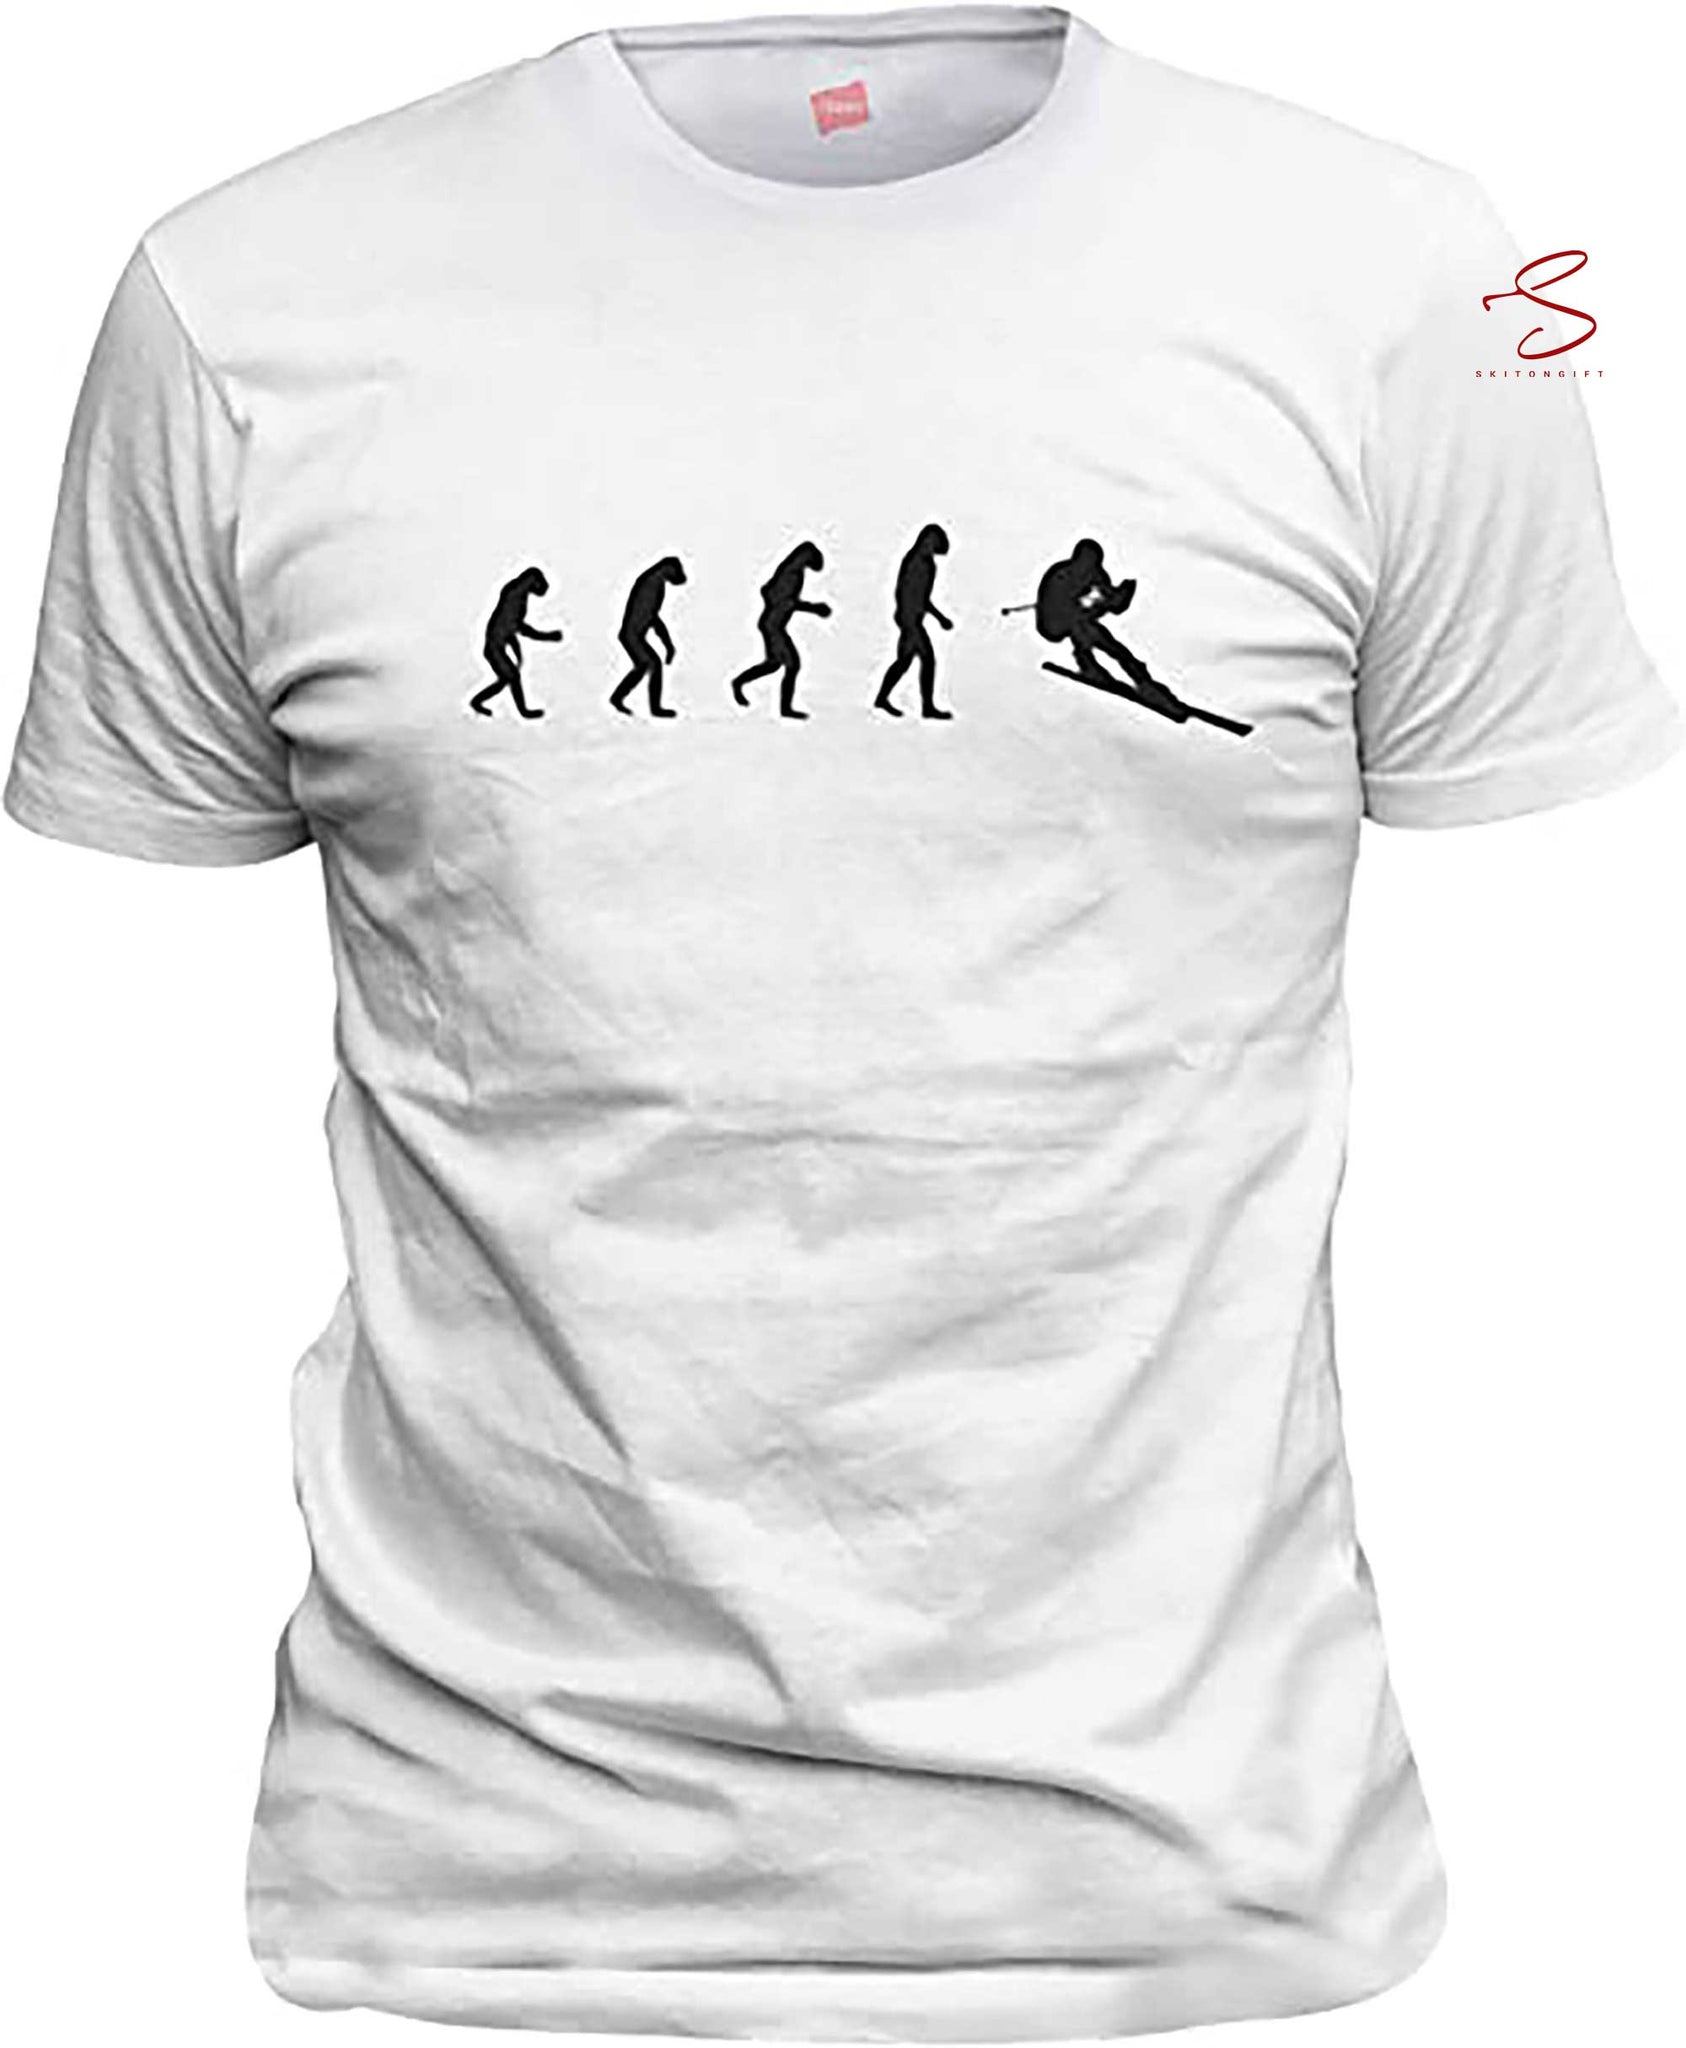 Skitongift MenS Evolution Of Man To Skier T Shirt